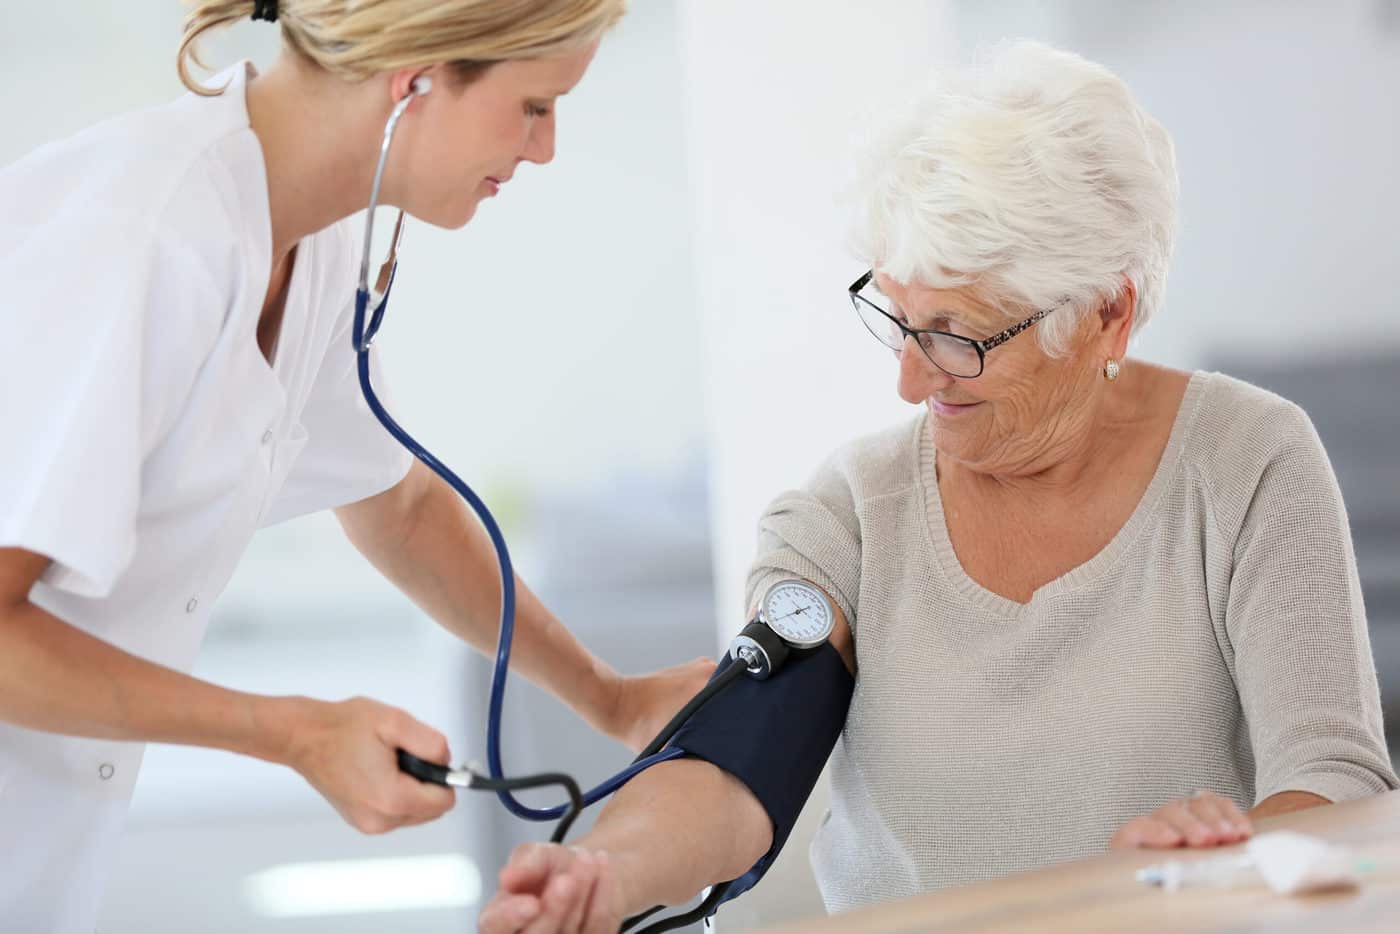 Pflegerin misst Blutdruck bei älterer Dame